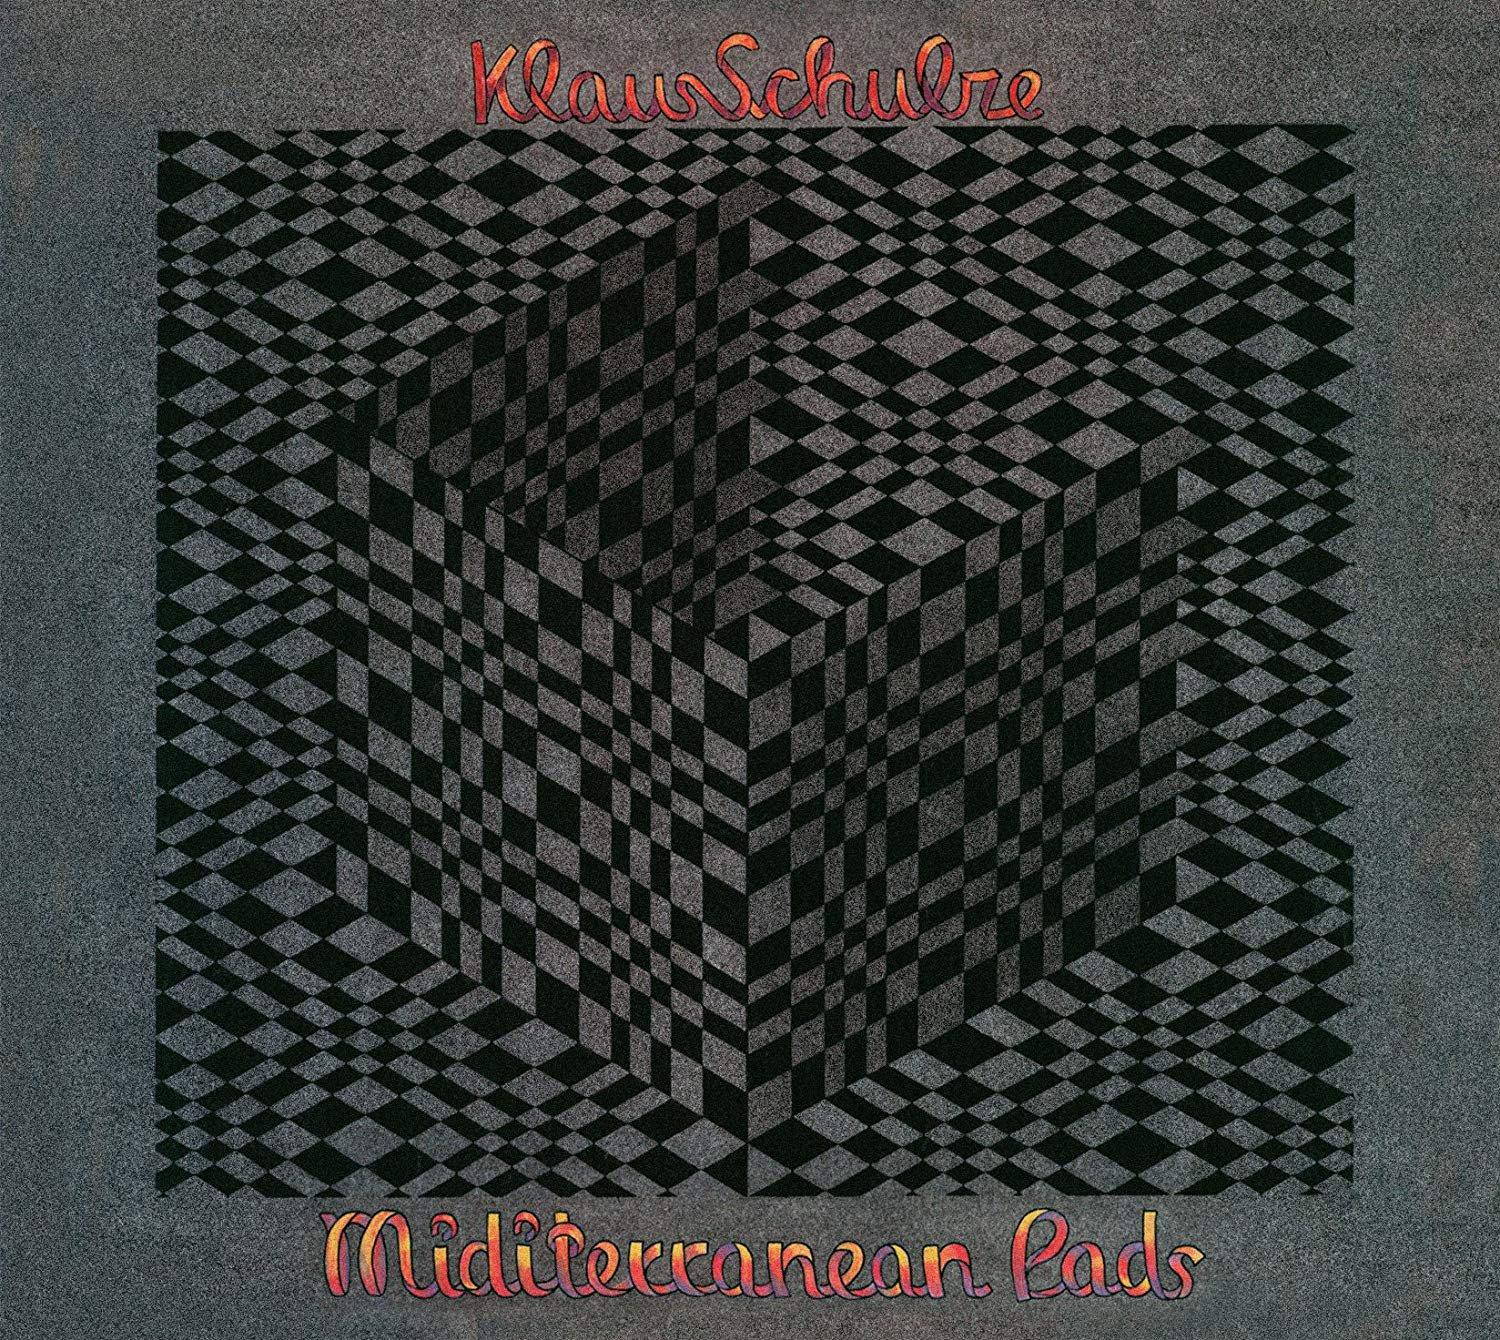 Klaus Schulze - Miditerranean Pads - (CD)